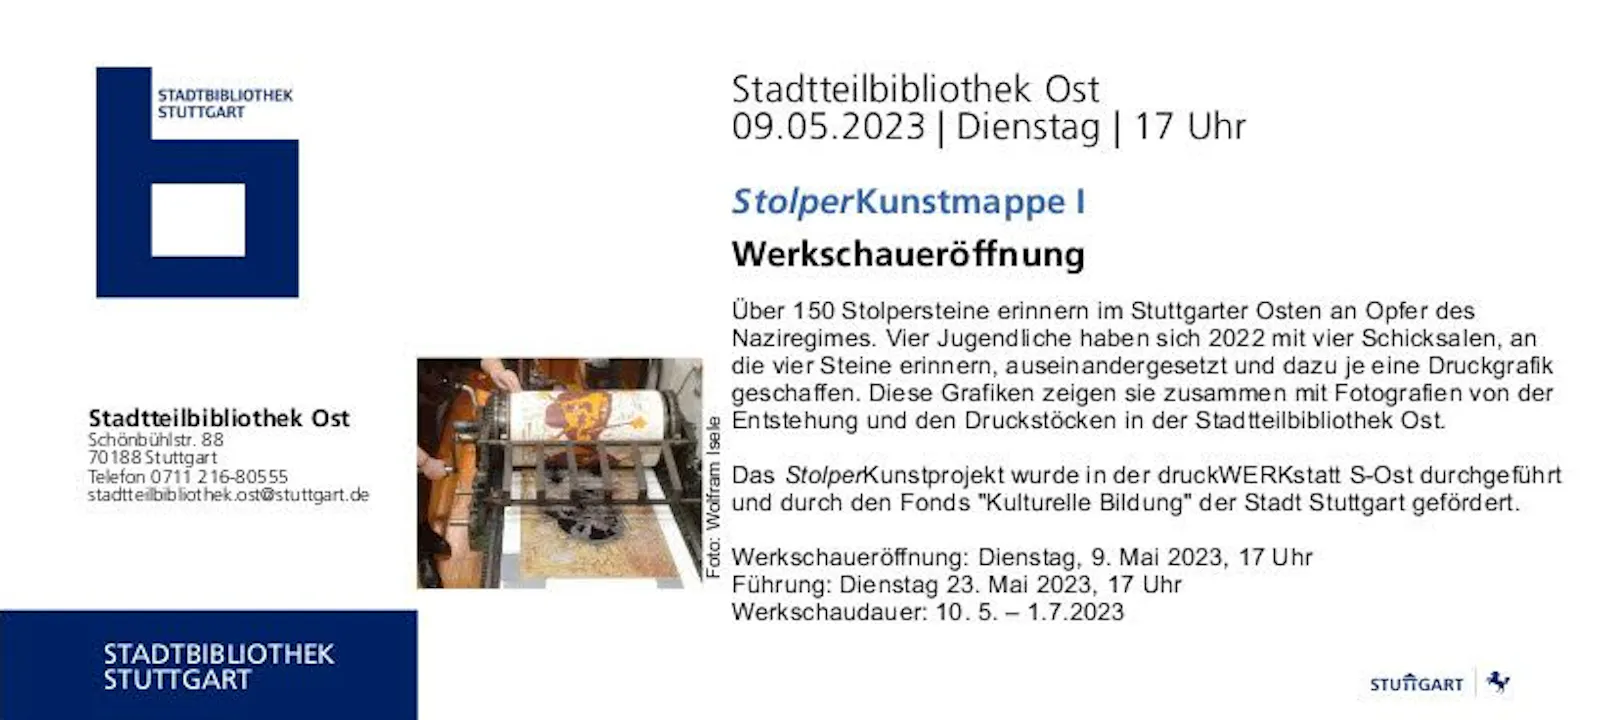 Flyer der Stadtteilbibliothek Stuttgart-Ost zur Ausstellungseröffnung "StolperKunsmappe 1" am 9. Mai.